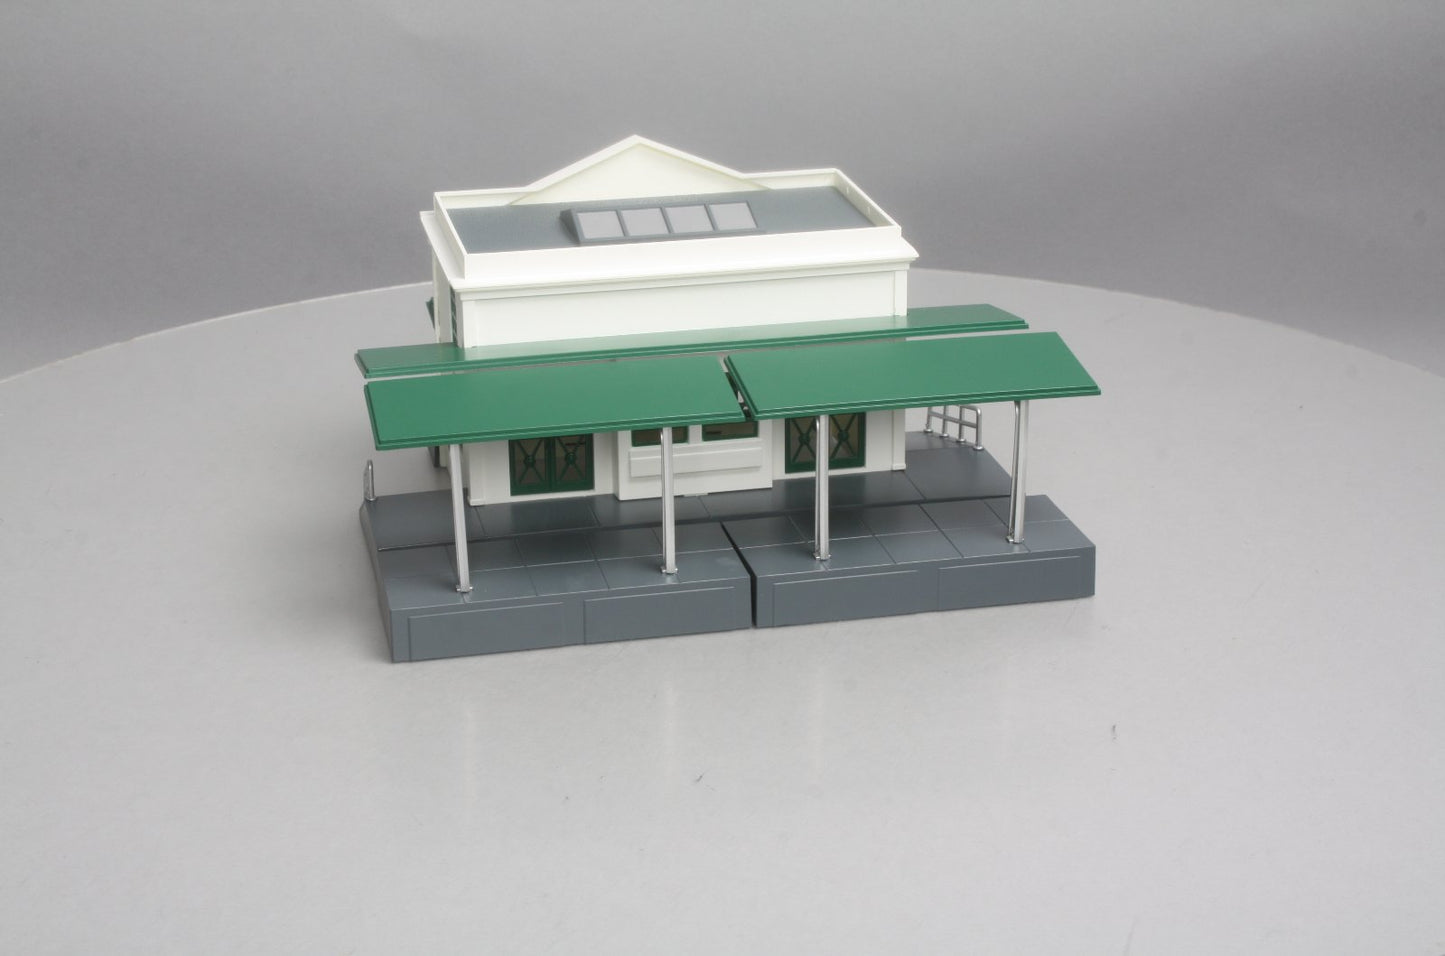 Bachmann 45318 O Plasticville Built-Up Union Station Building